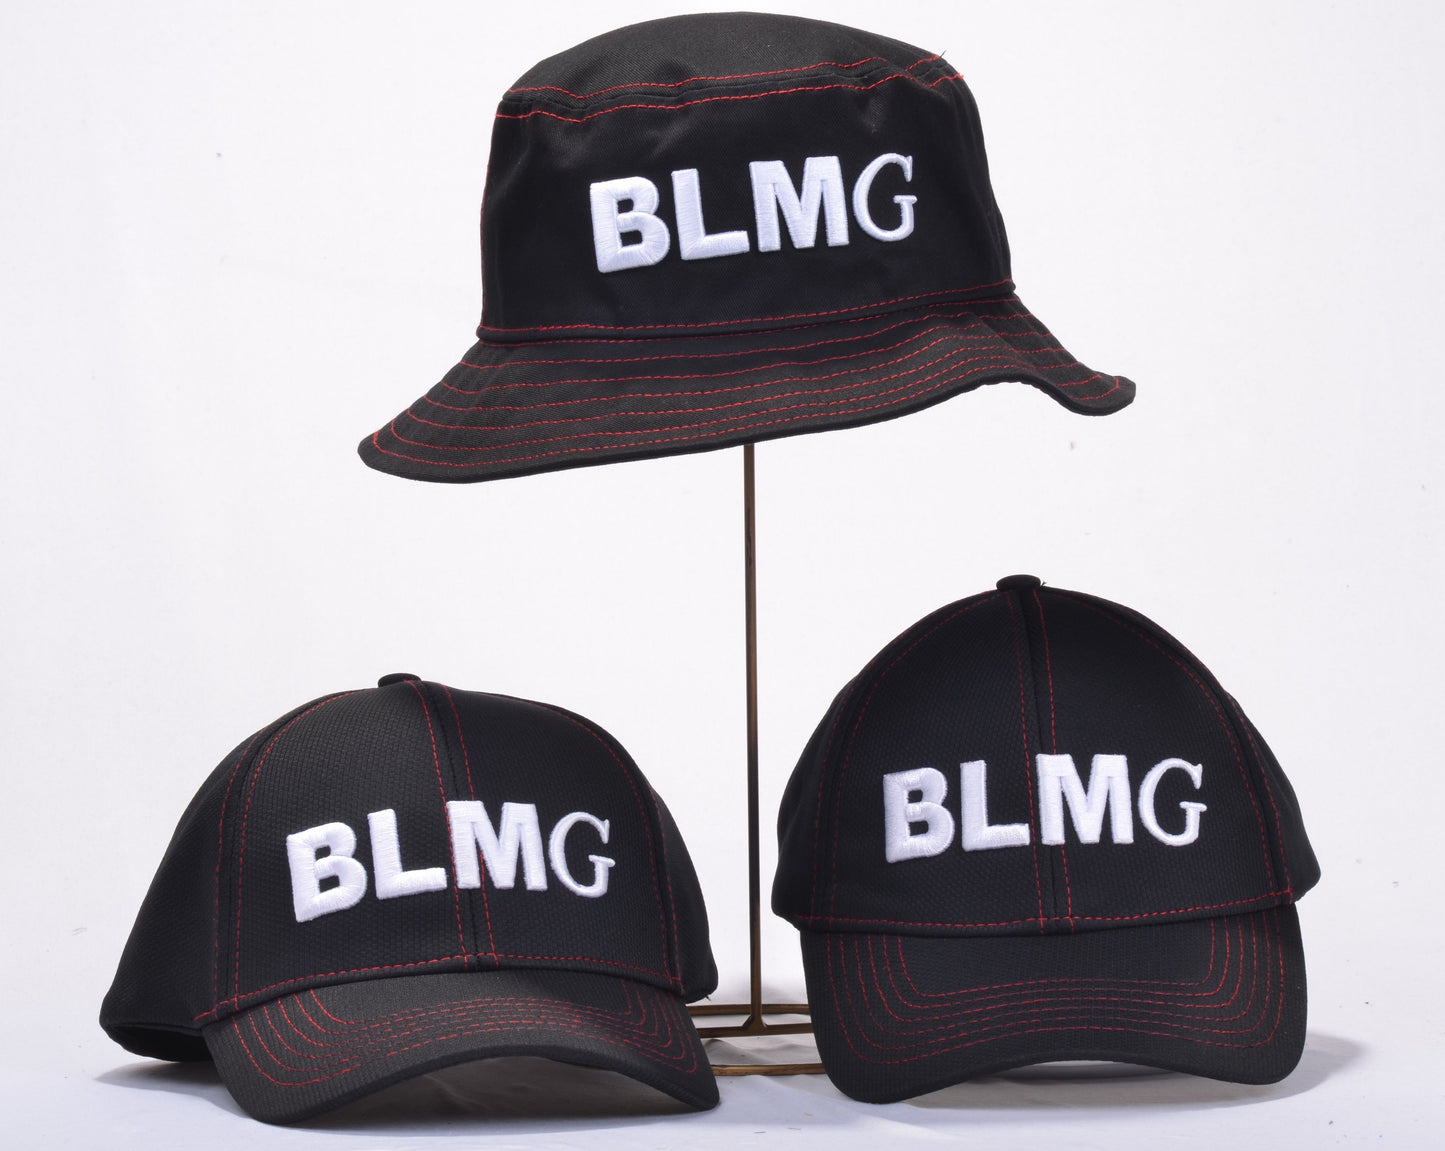 BLMG Bucket Hat